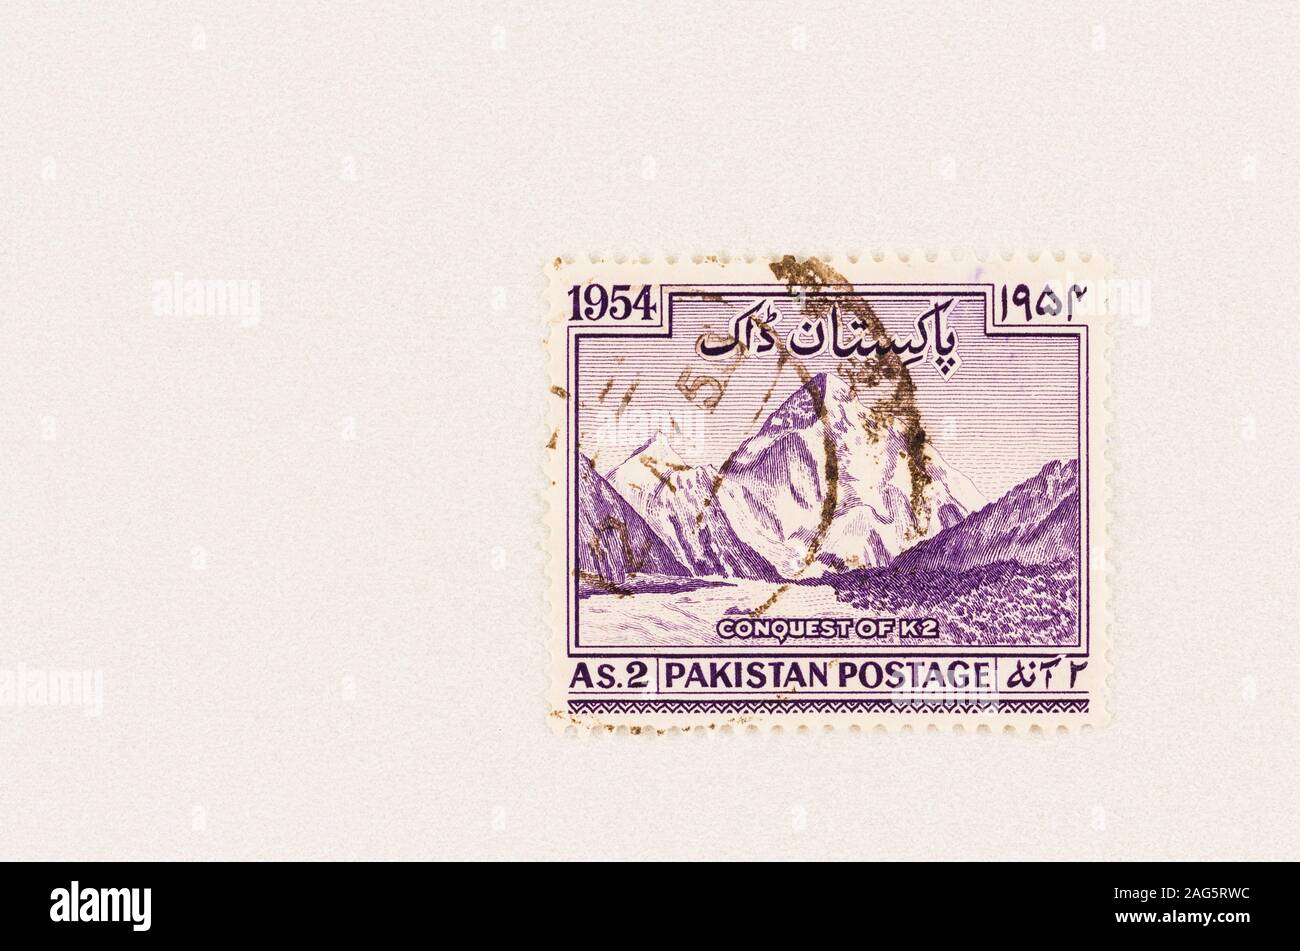 Purple Pakistan stamp with mountain and Conquest of K2 , 1954, aka Mount Godwin Austen,  of Karakoram range. Stock Photo